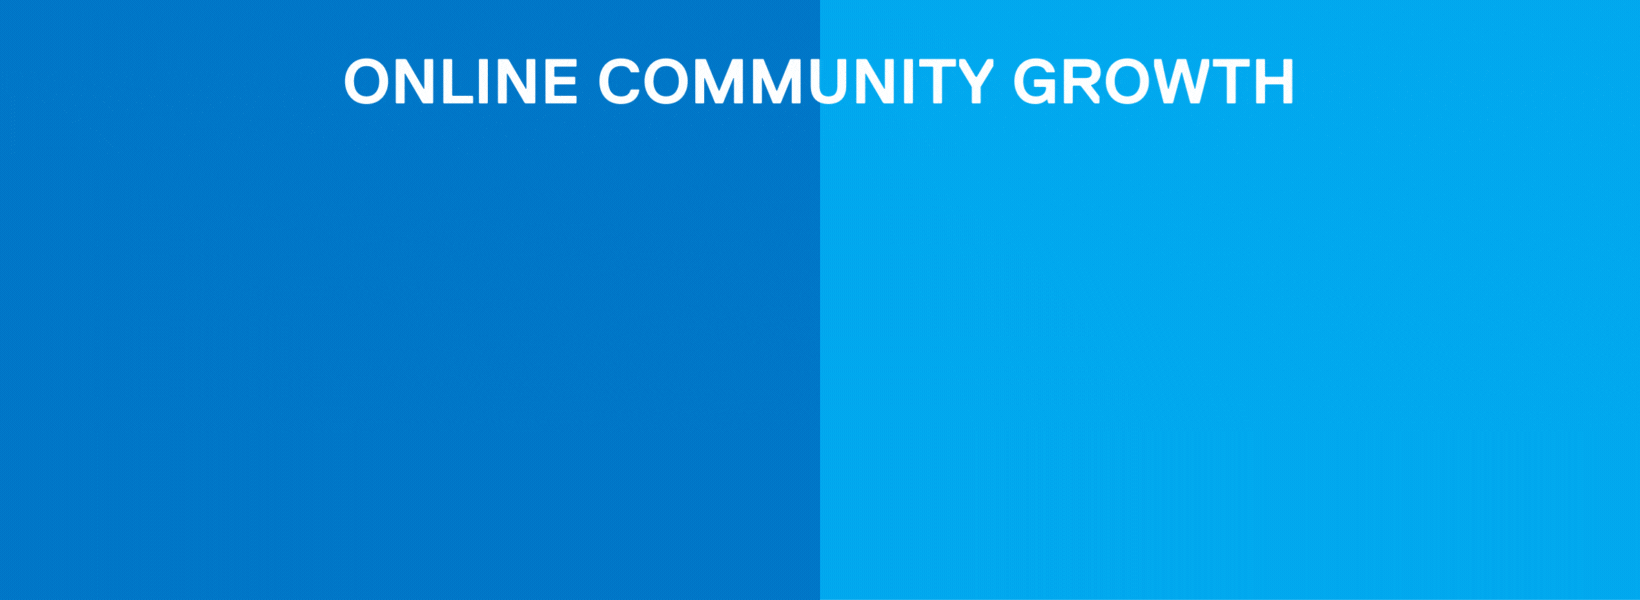 Online community growth